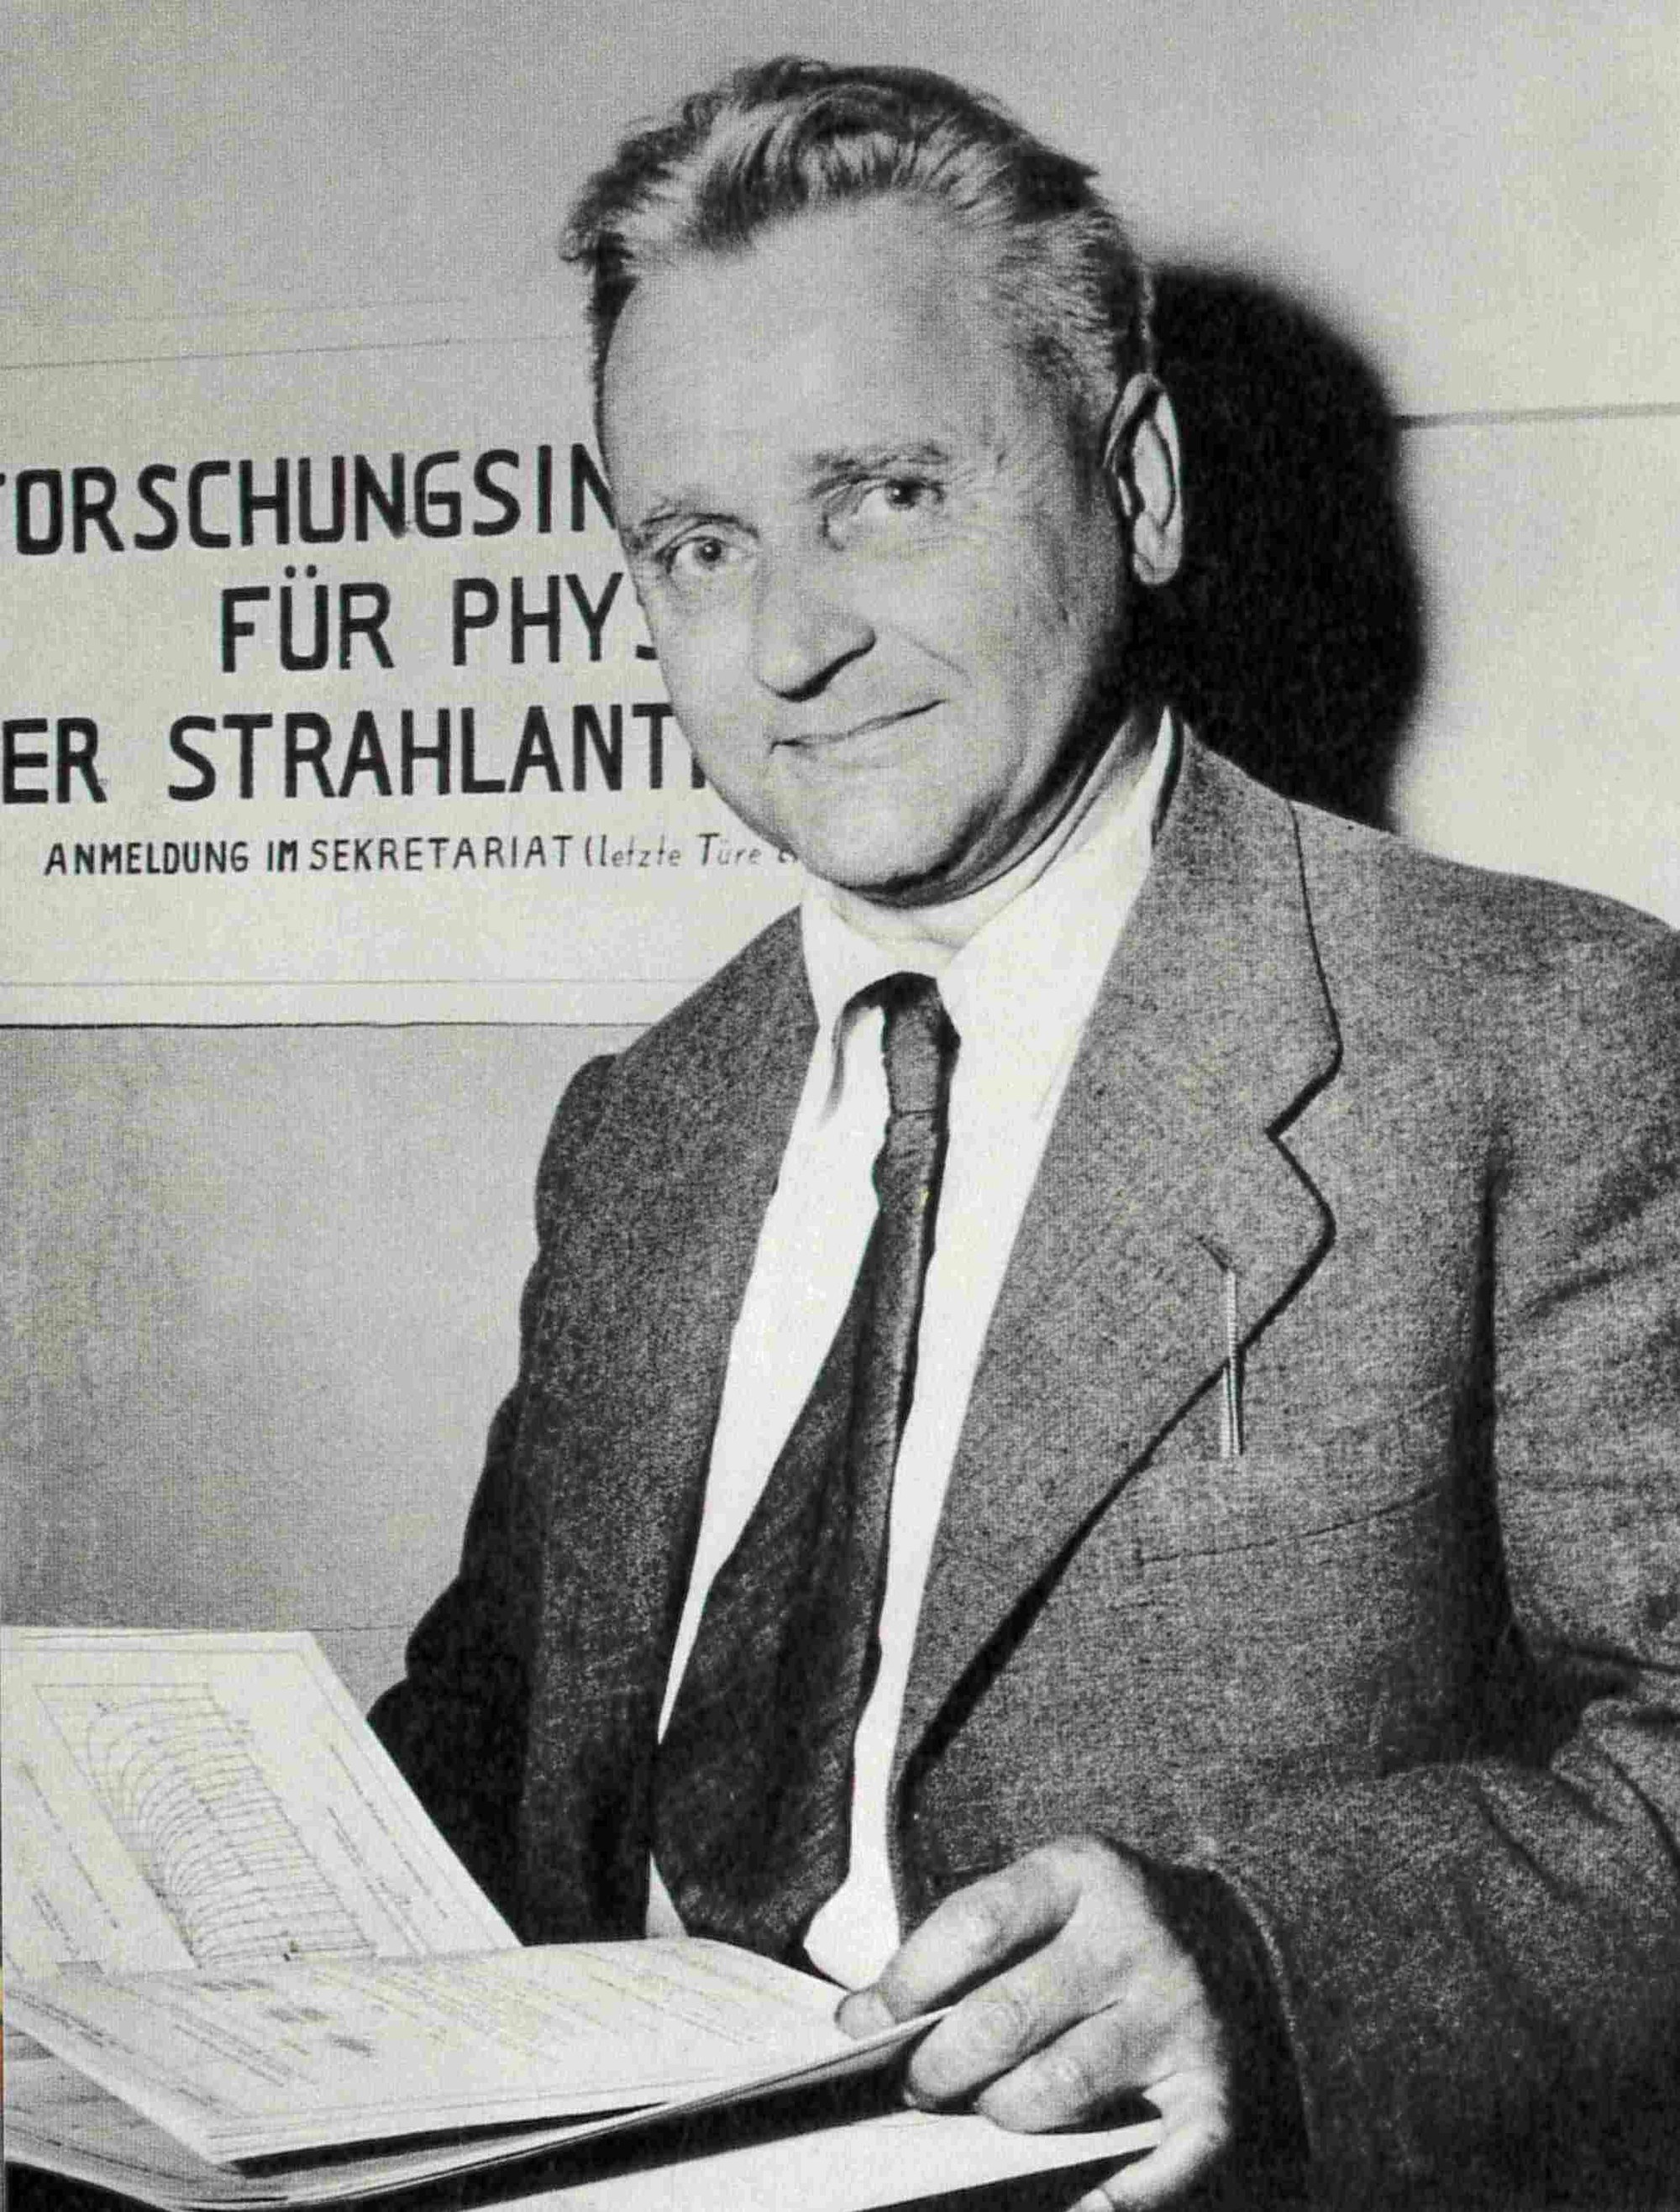 Professor Eugen Sänger gründete 1959 den DLR-Standort Lampoldshausen